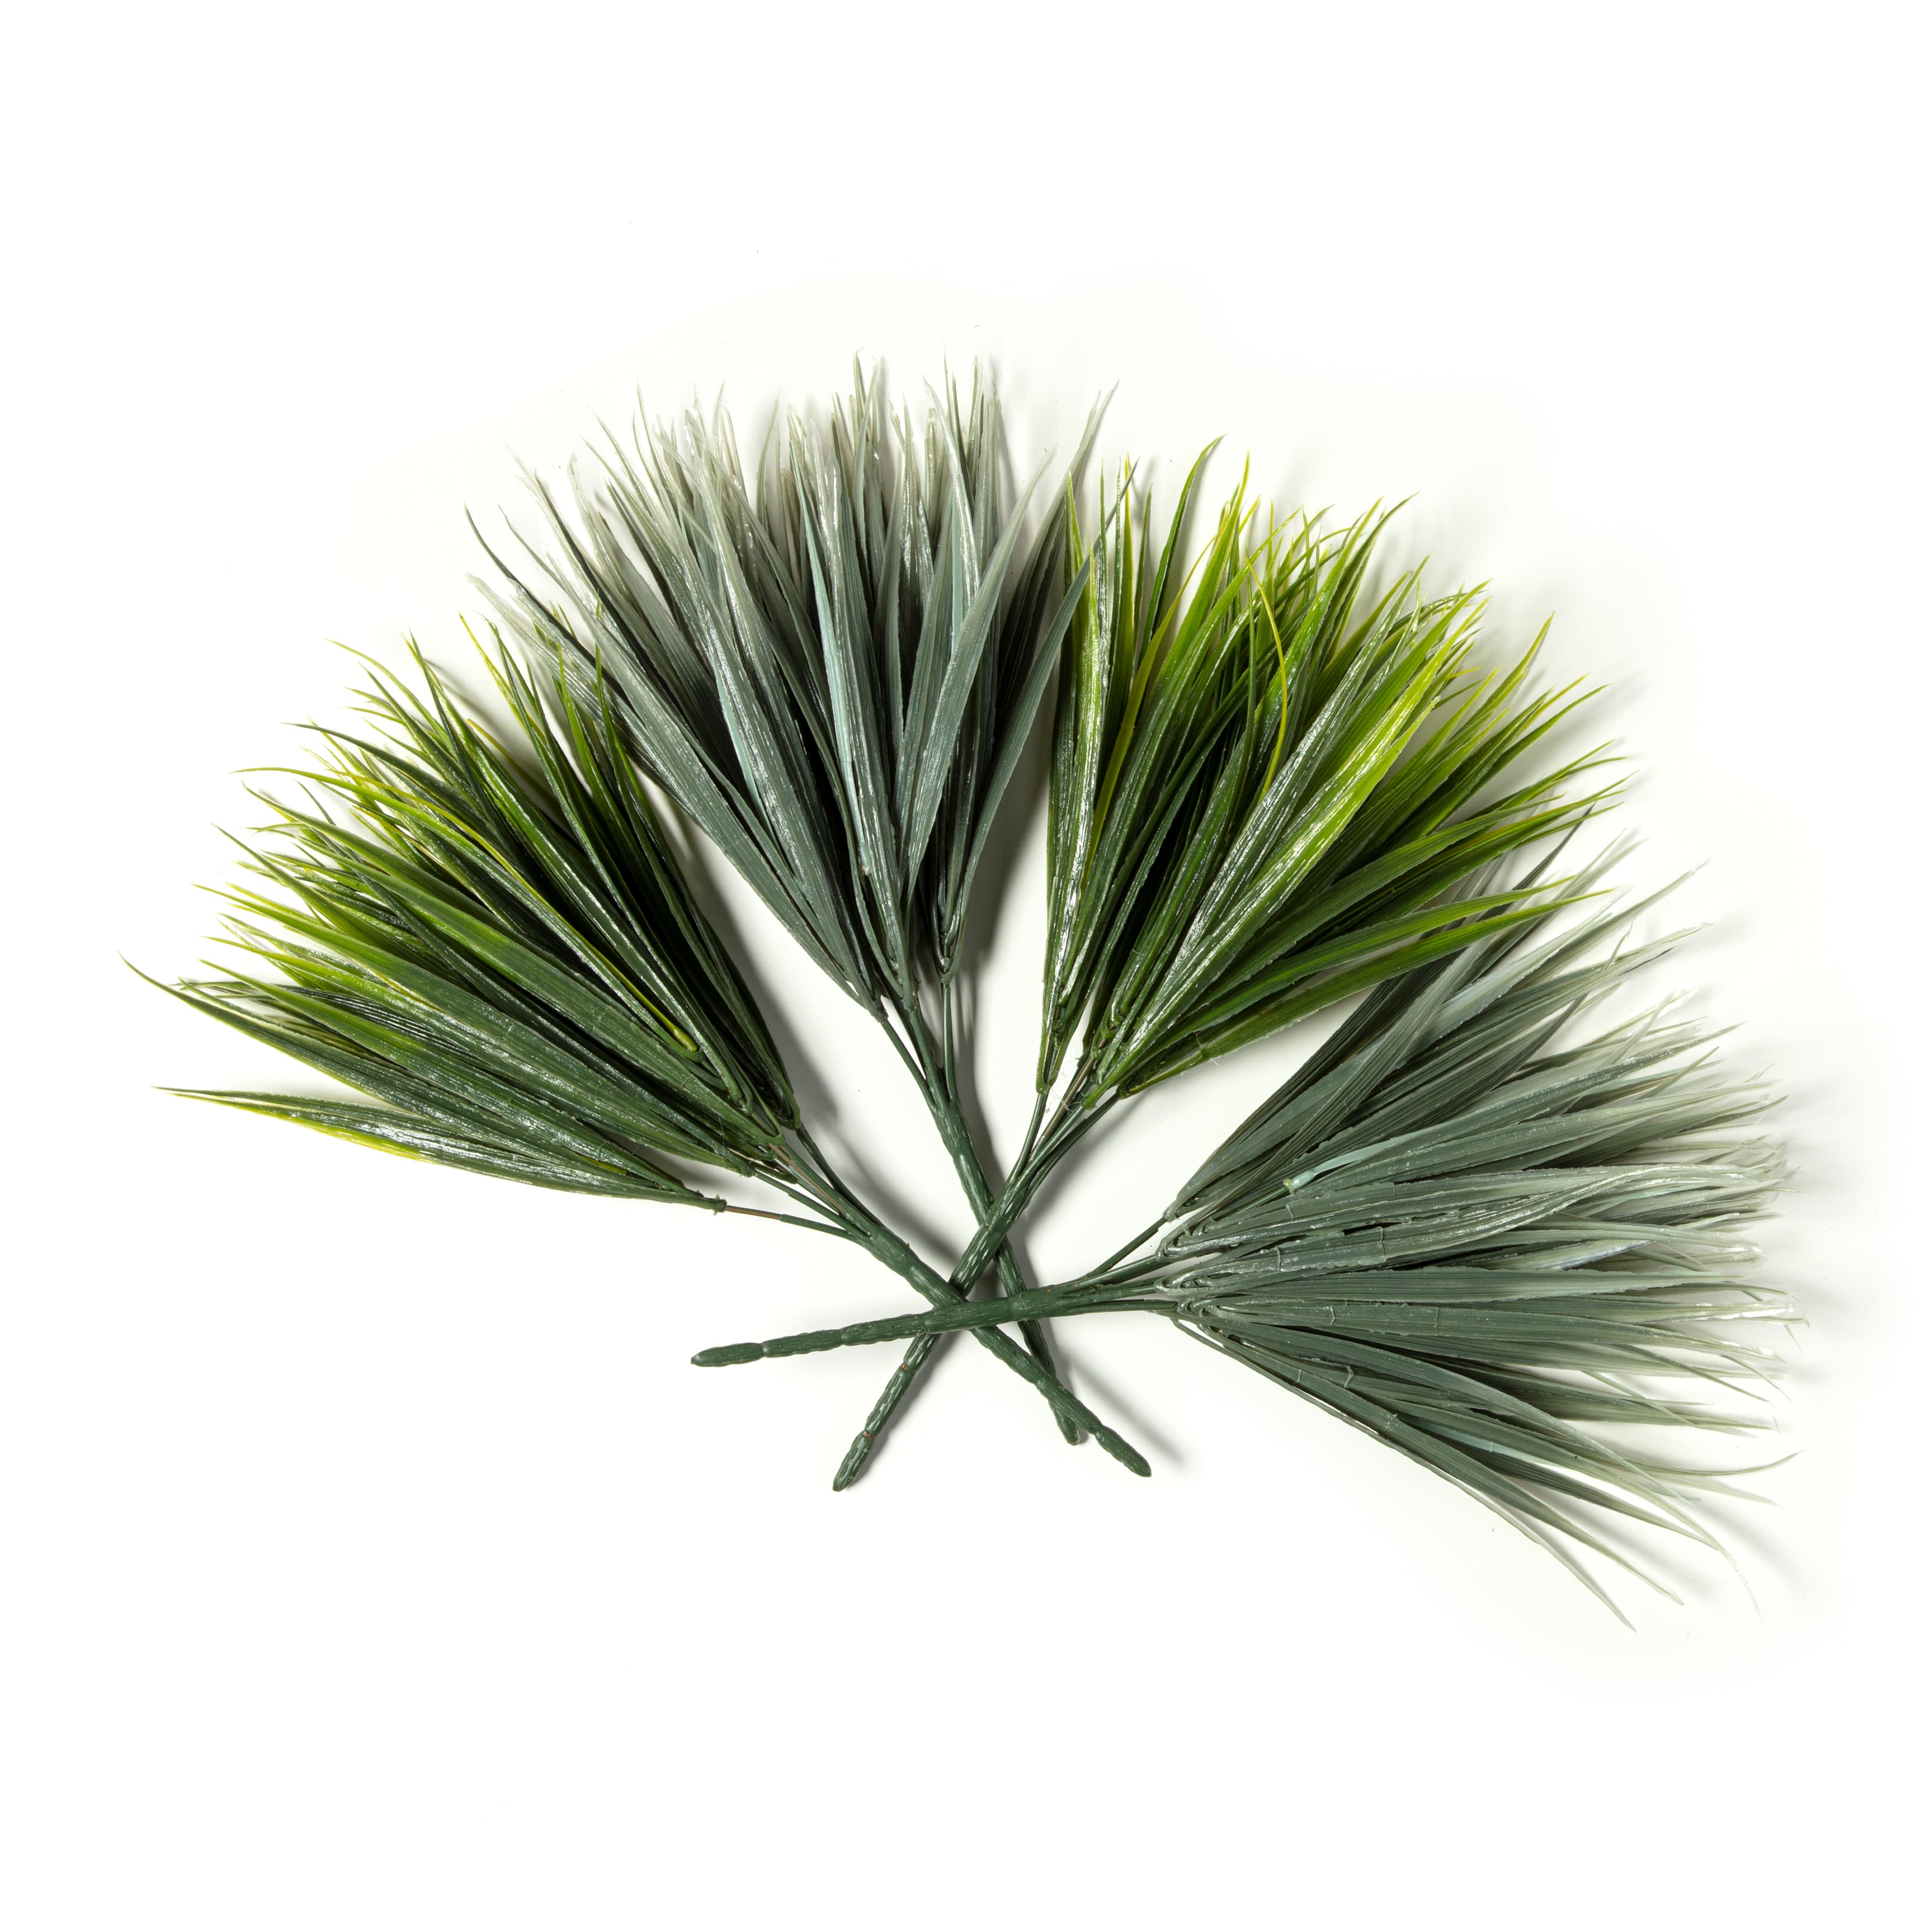 24 Pack: Assorted Wild Grass Bush by Ashland&#xAE;